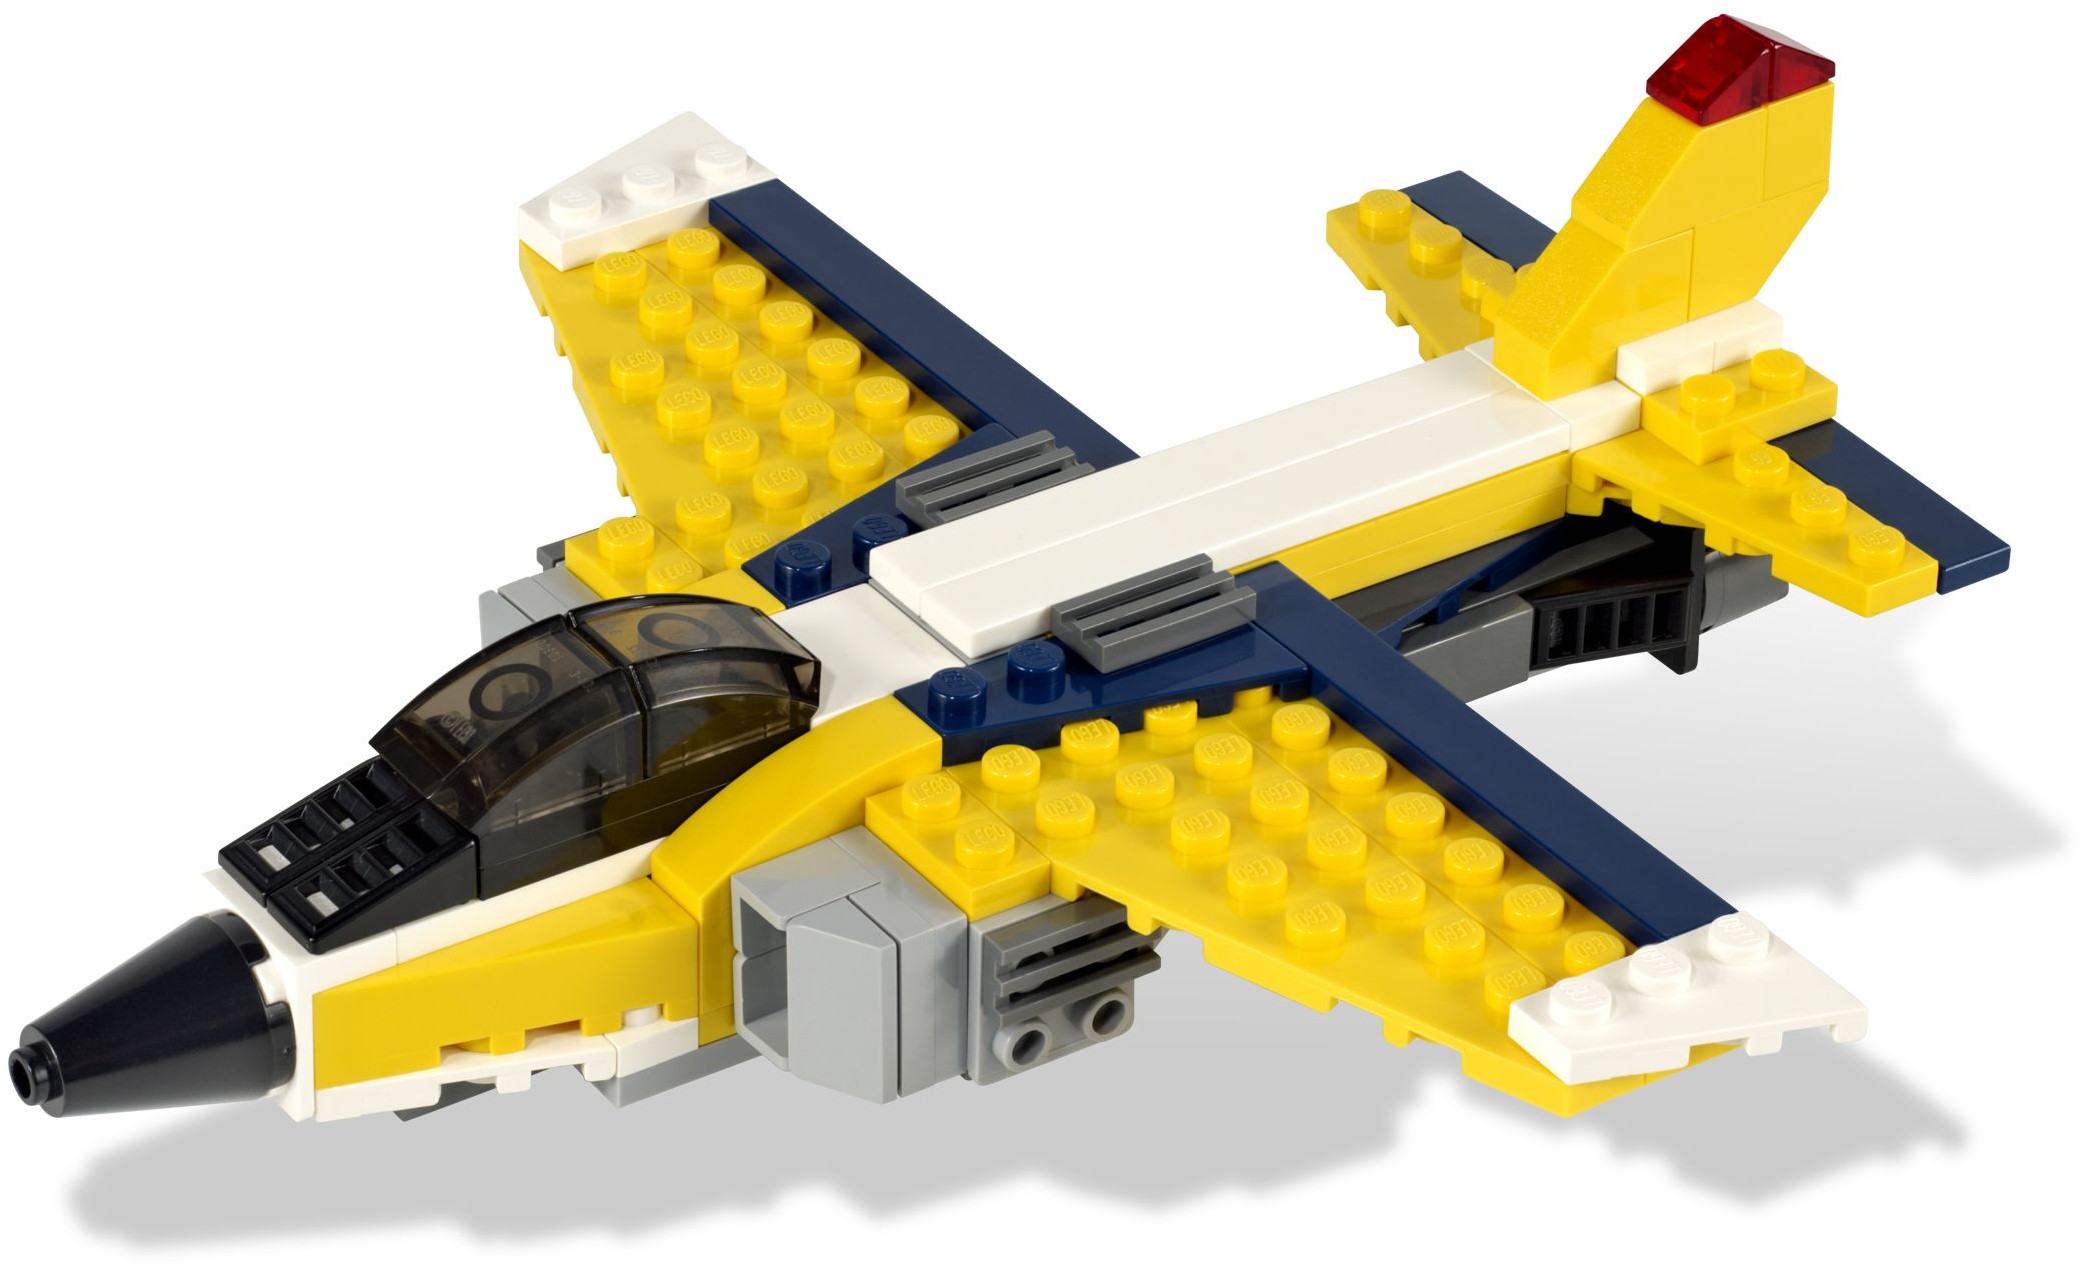 NEW Red White Blue Aeroplane RARE Lego Creator MINI JET AIRPLANE Set 7873